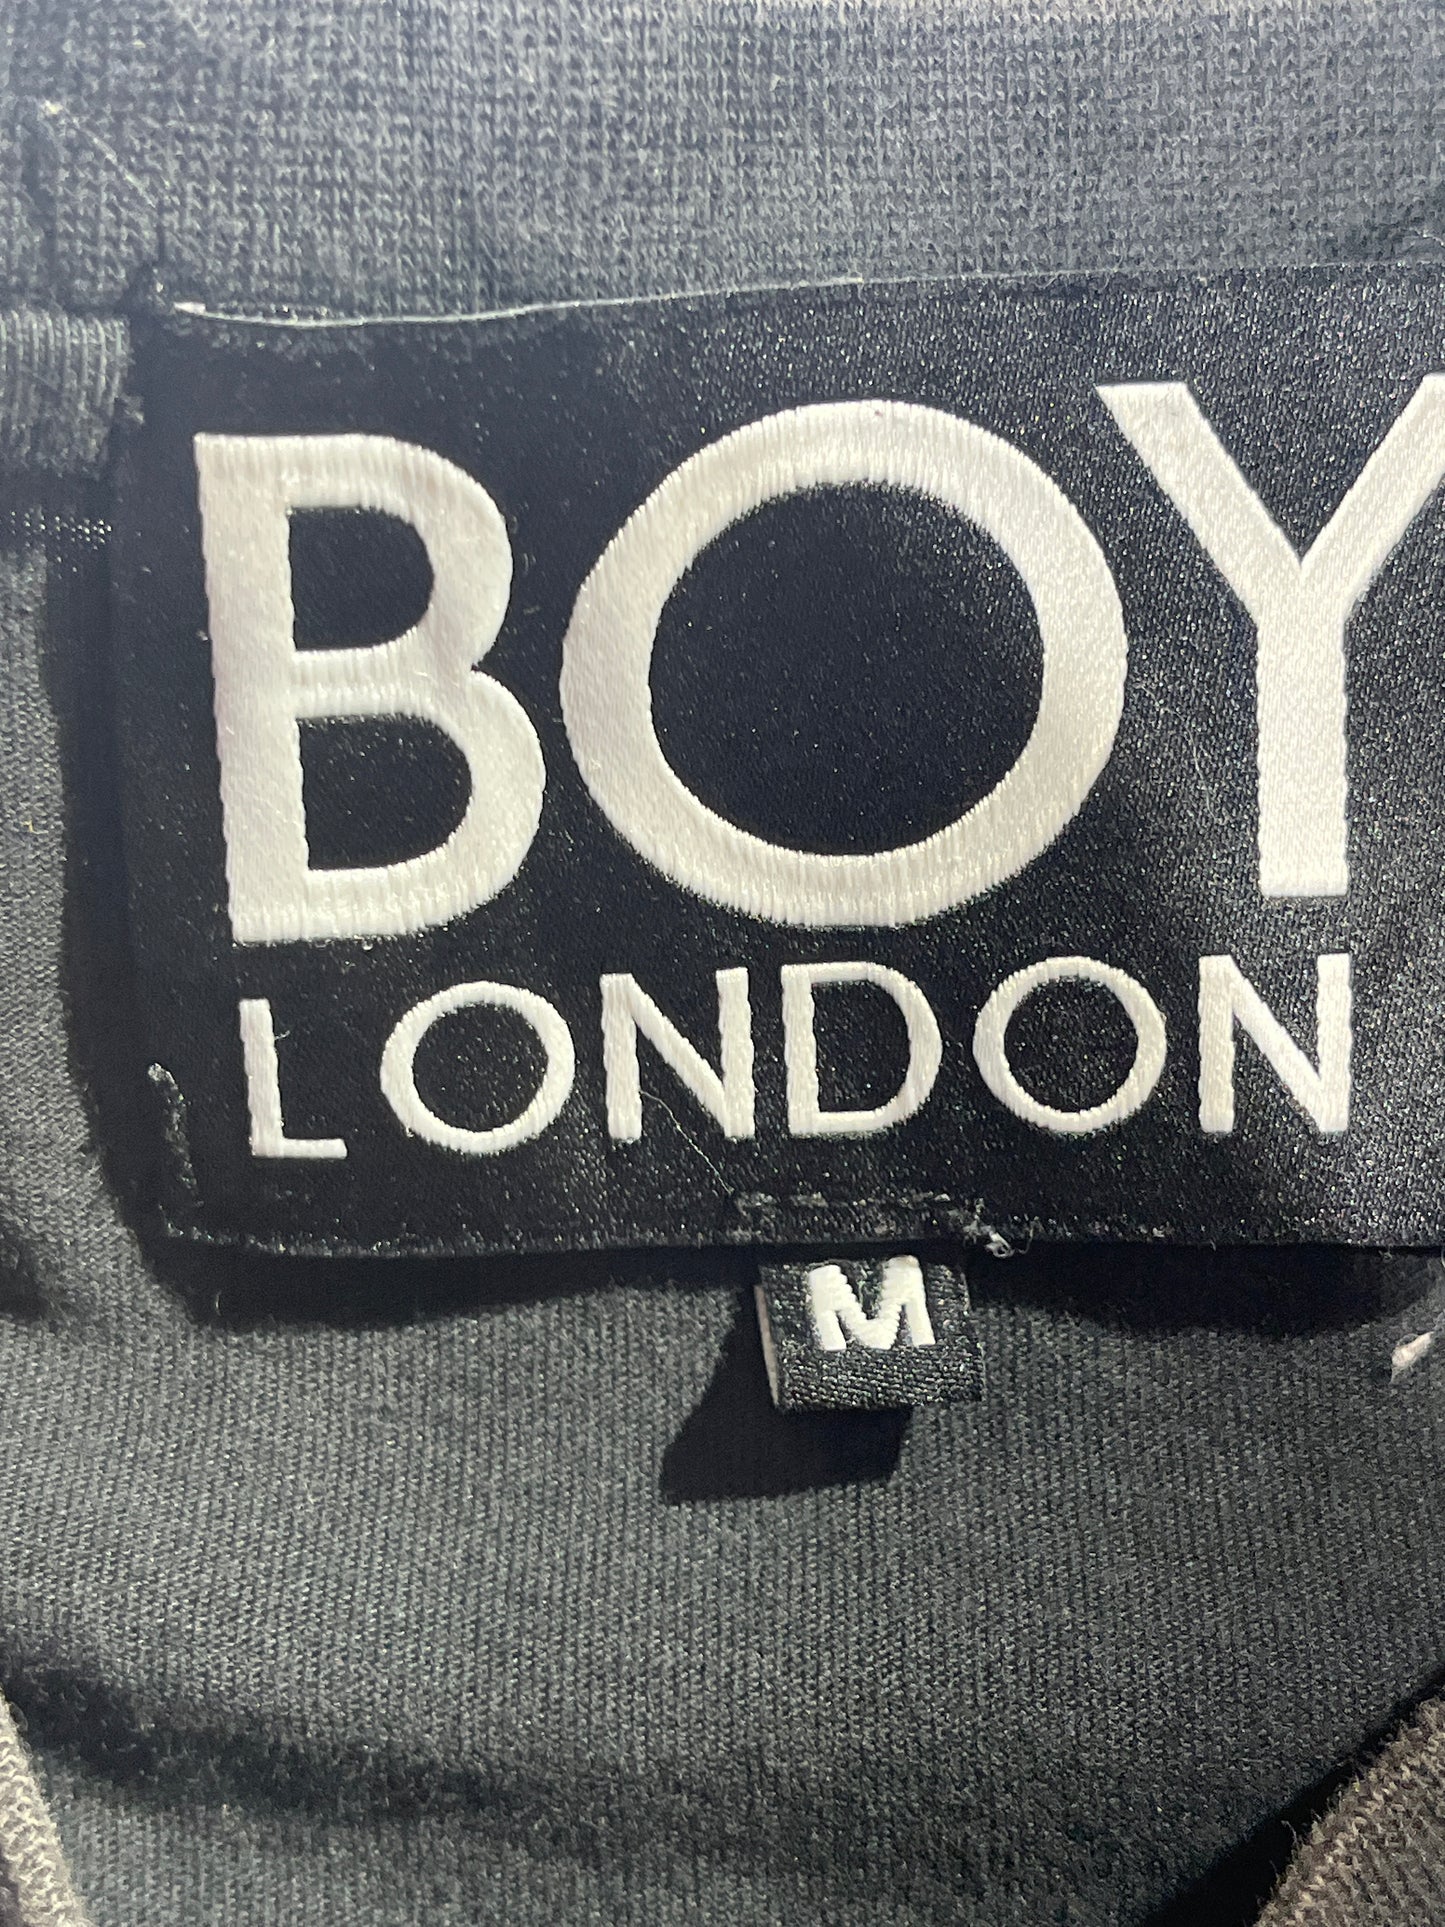 Vintage Boy London T-Shirt